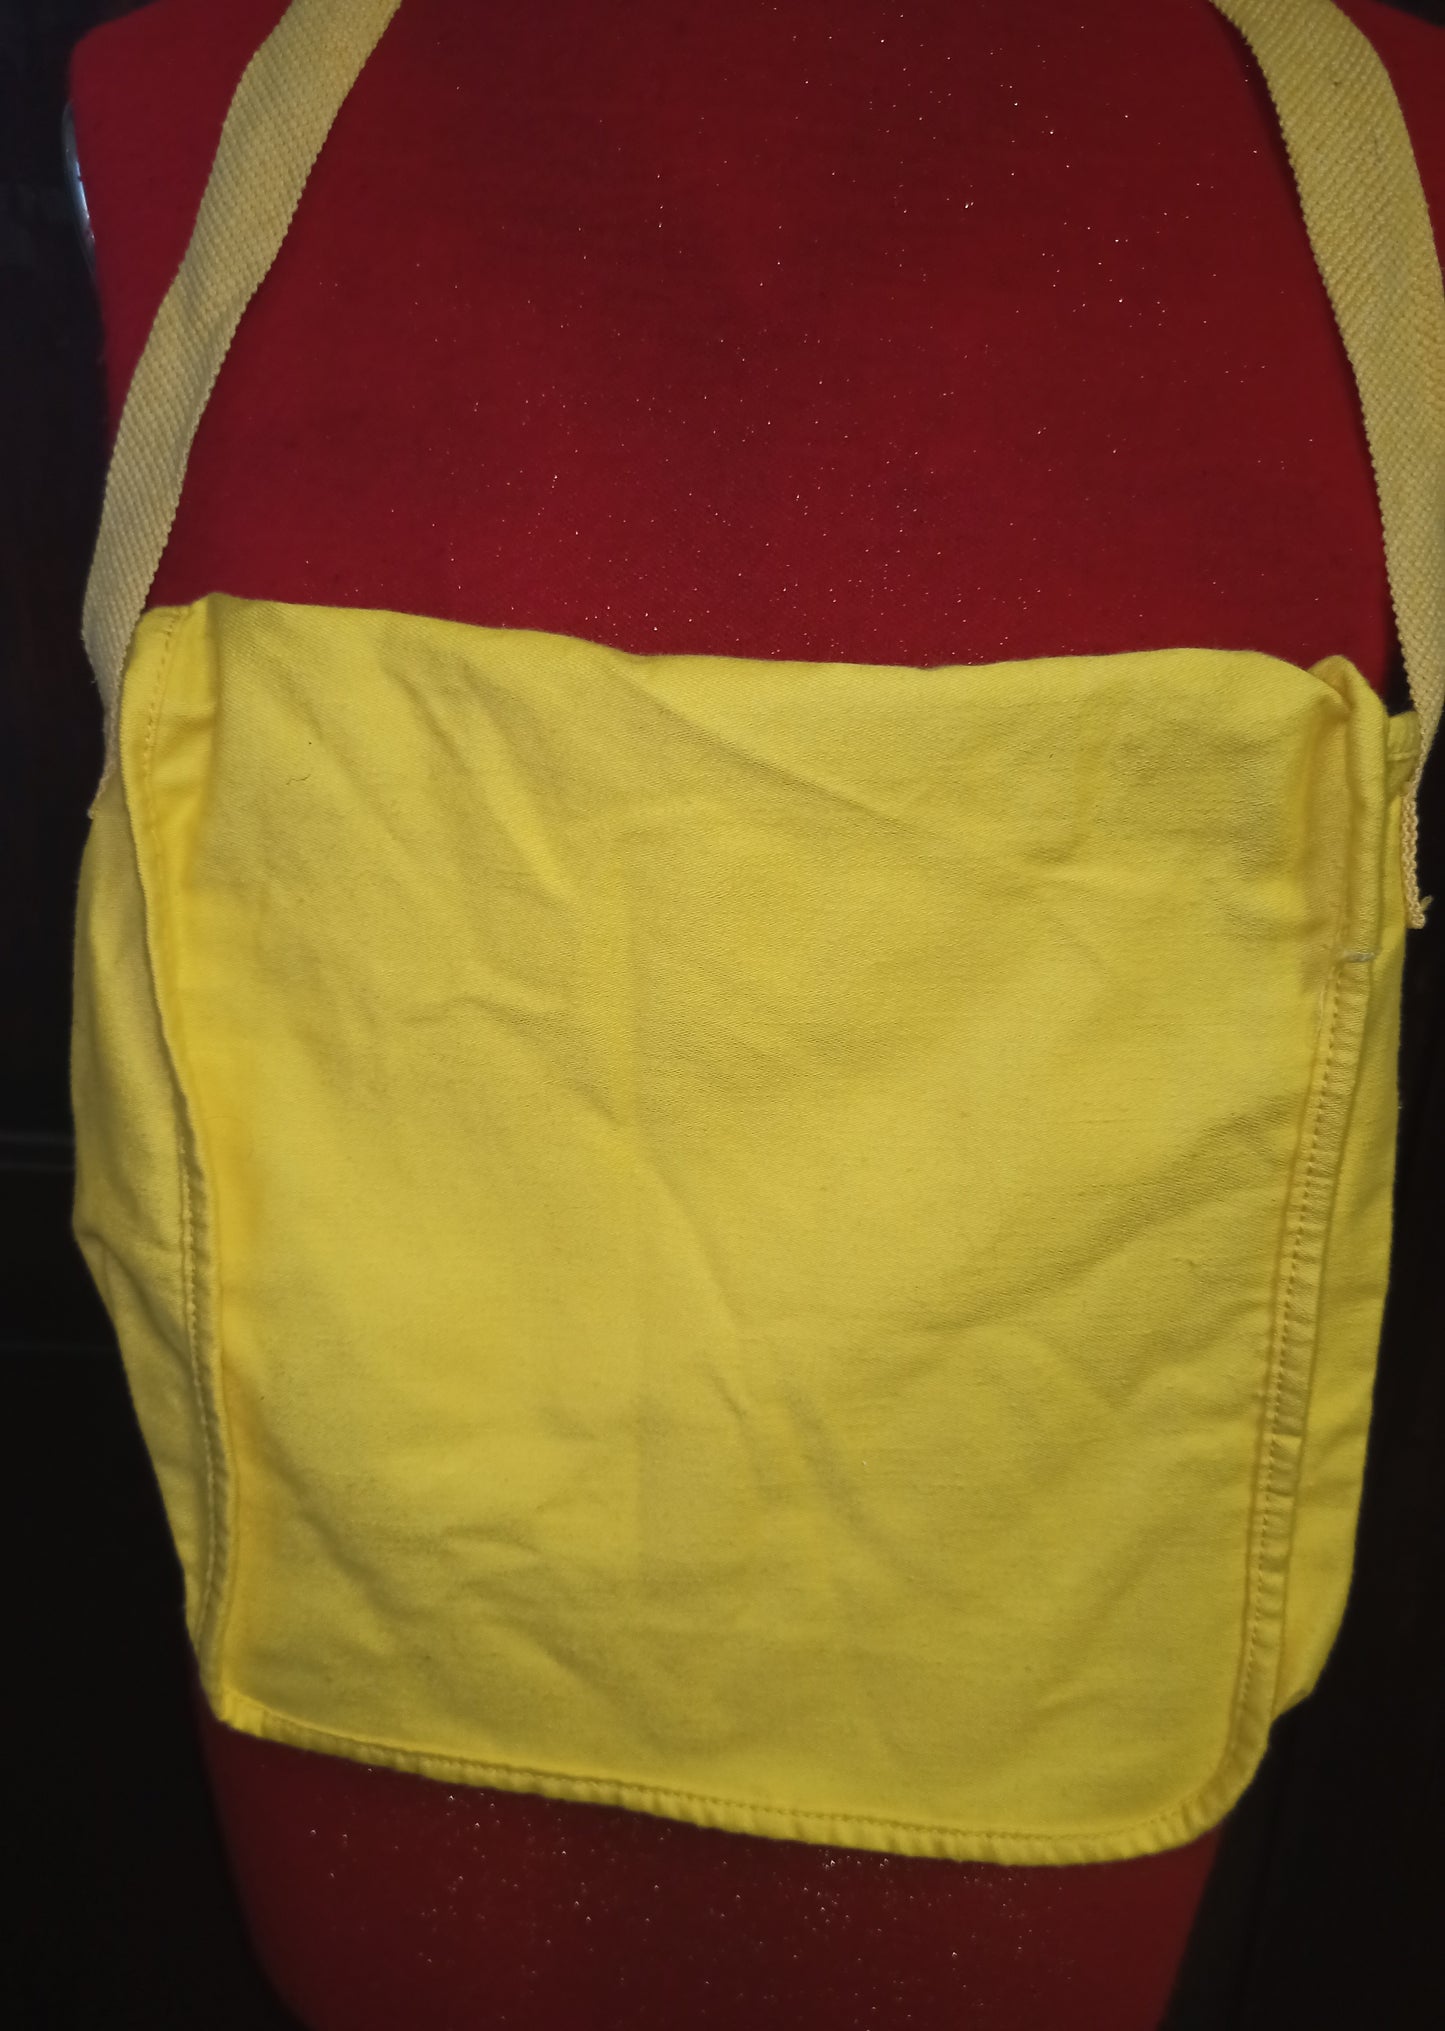 Levi's Pony Bag, original from the 80s